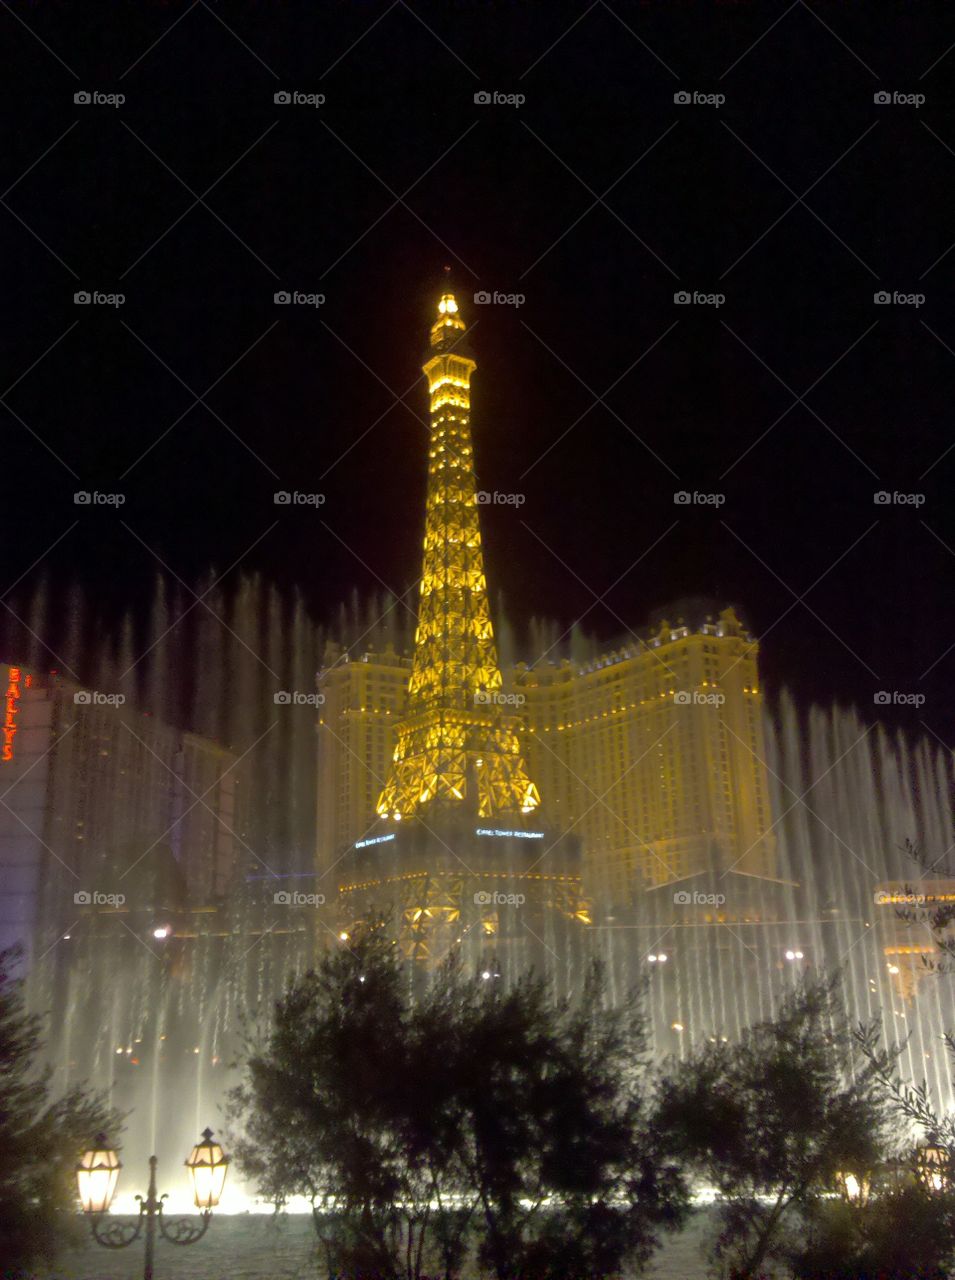 Paris Las Vegas Shot with The Bellagio and Bellagio Fountains at night